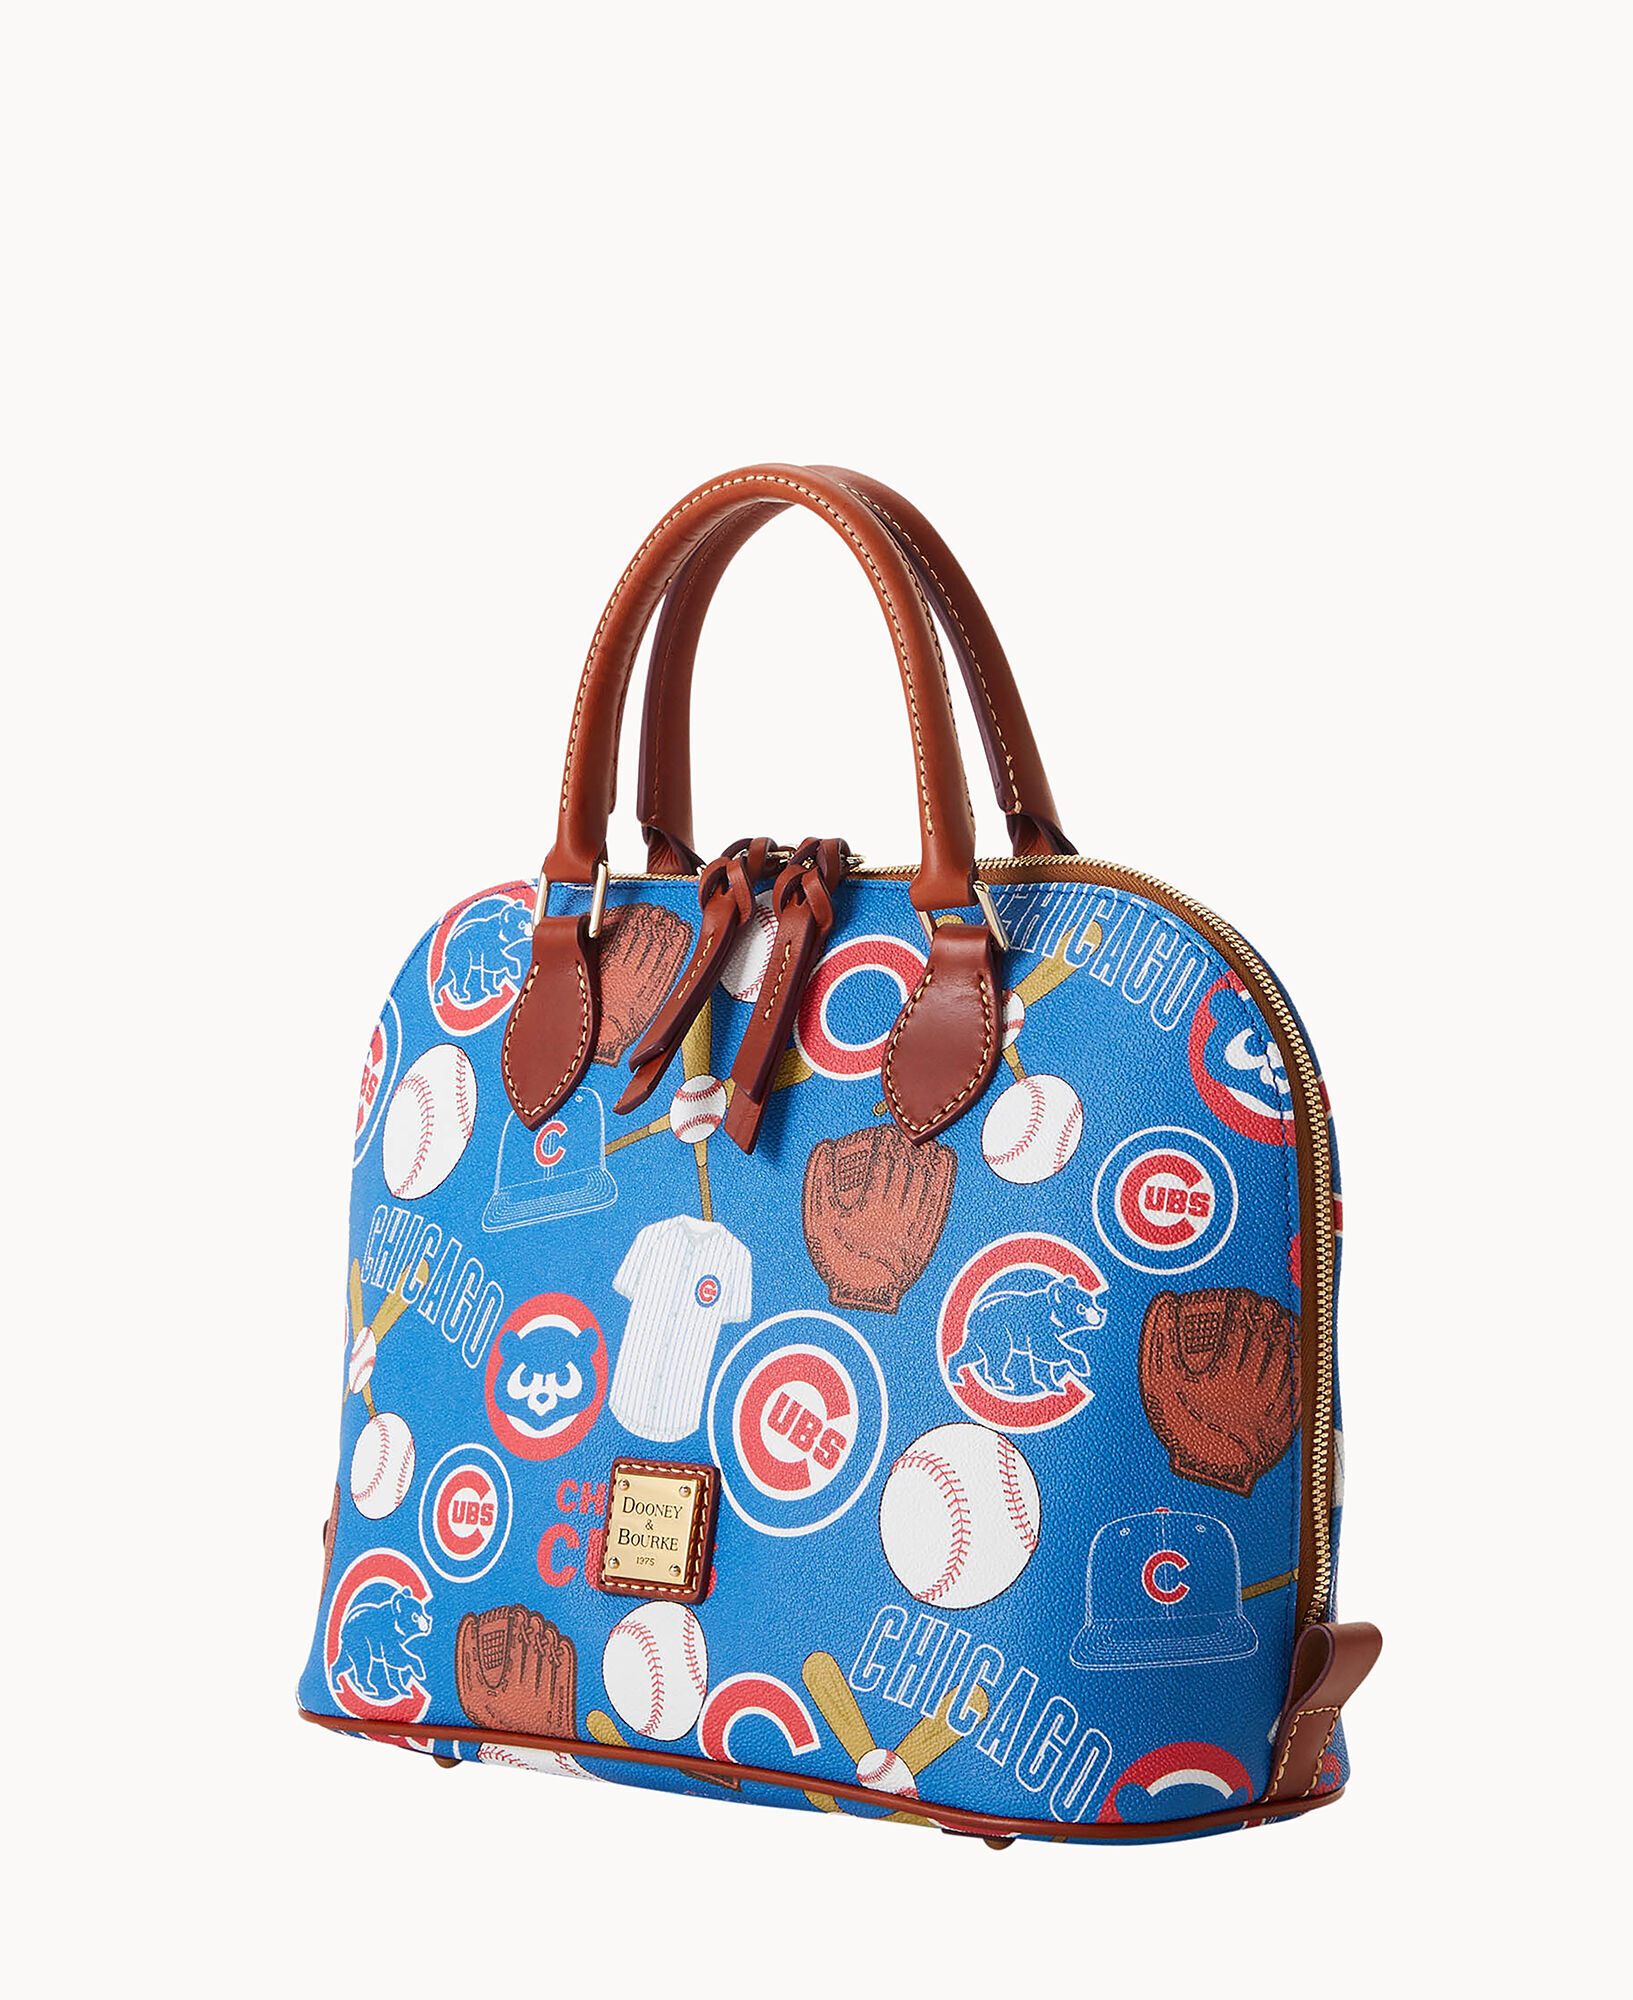 Dooney & Bourke Chicago Cubs Signature Large Zip Tote Bag